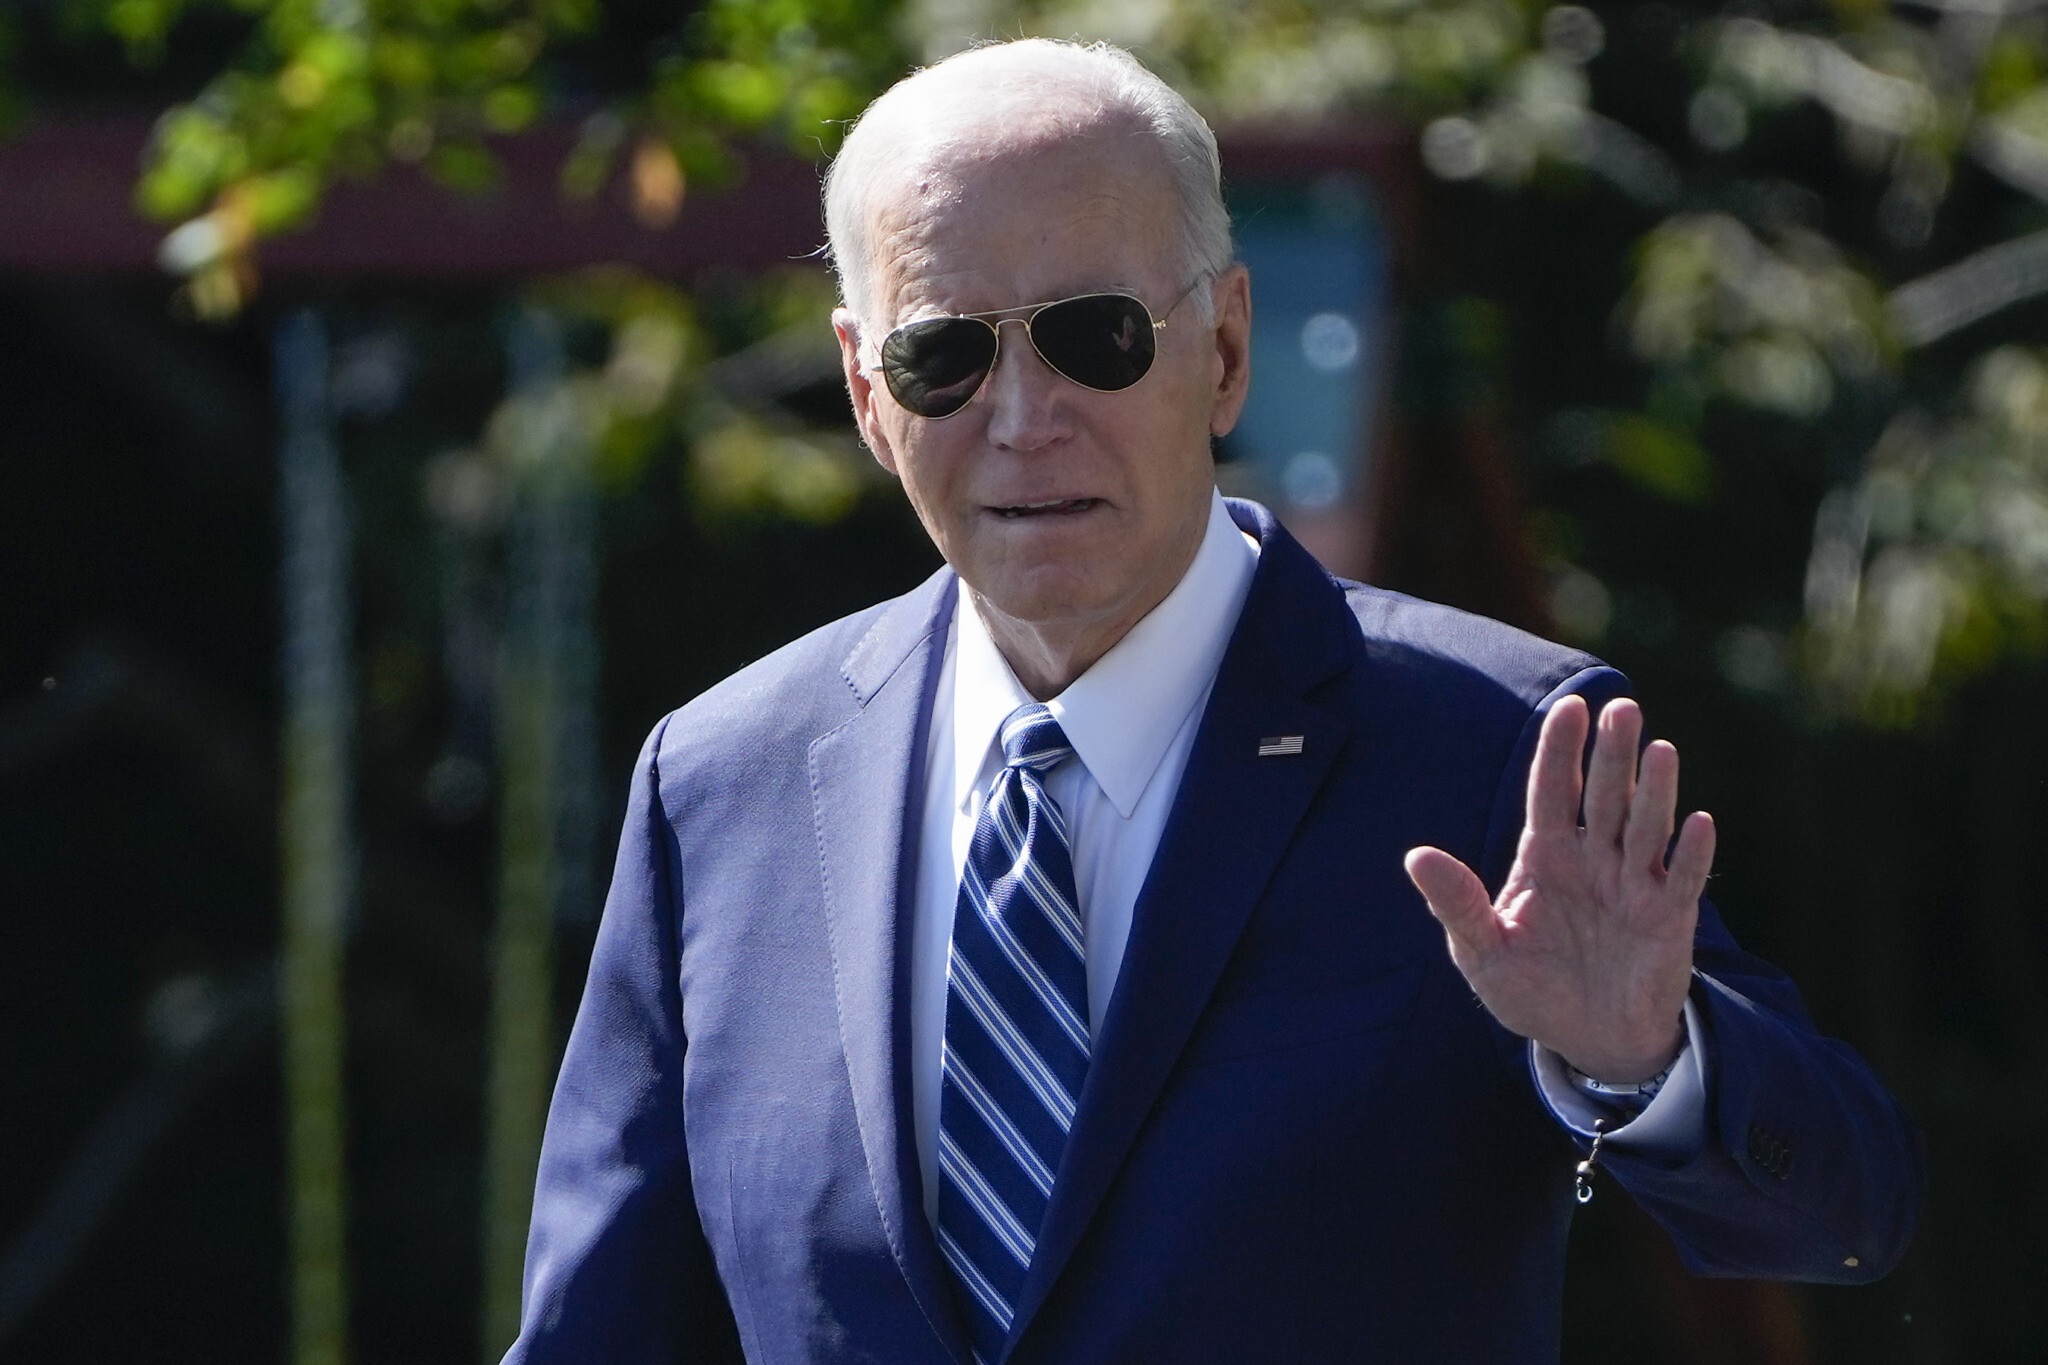 Biden to make wartime solidarity visit to Israel on Wednesday